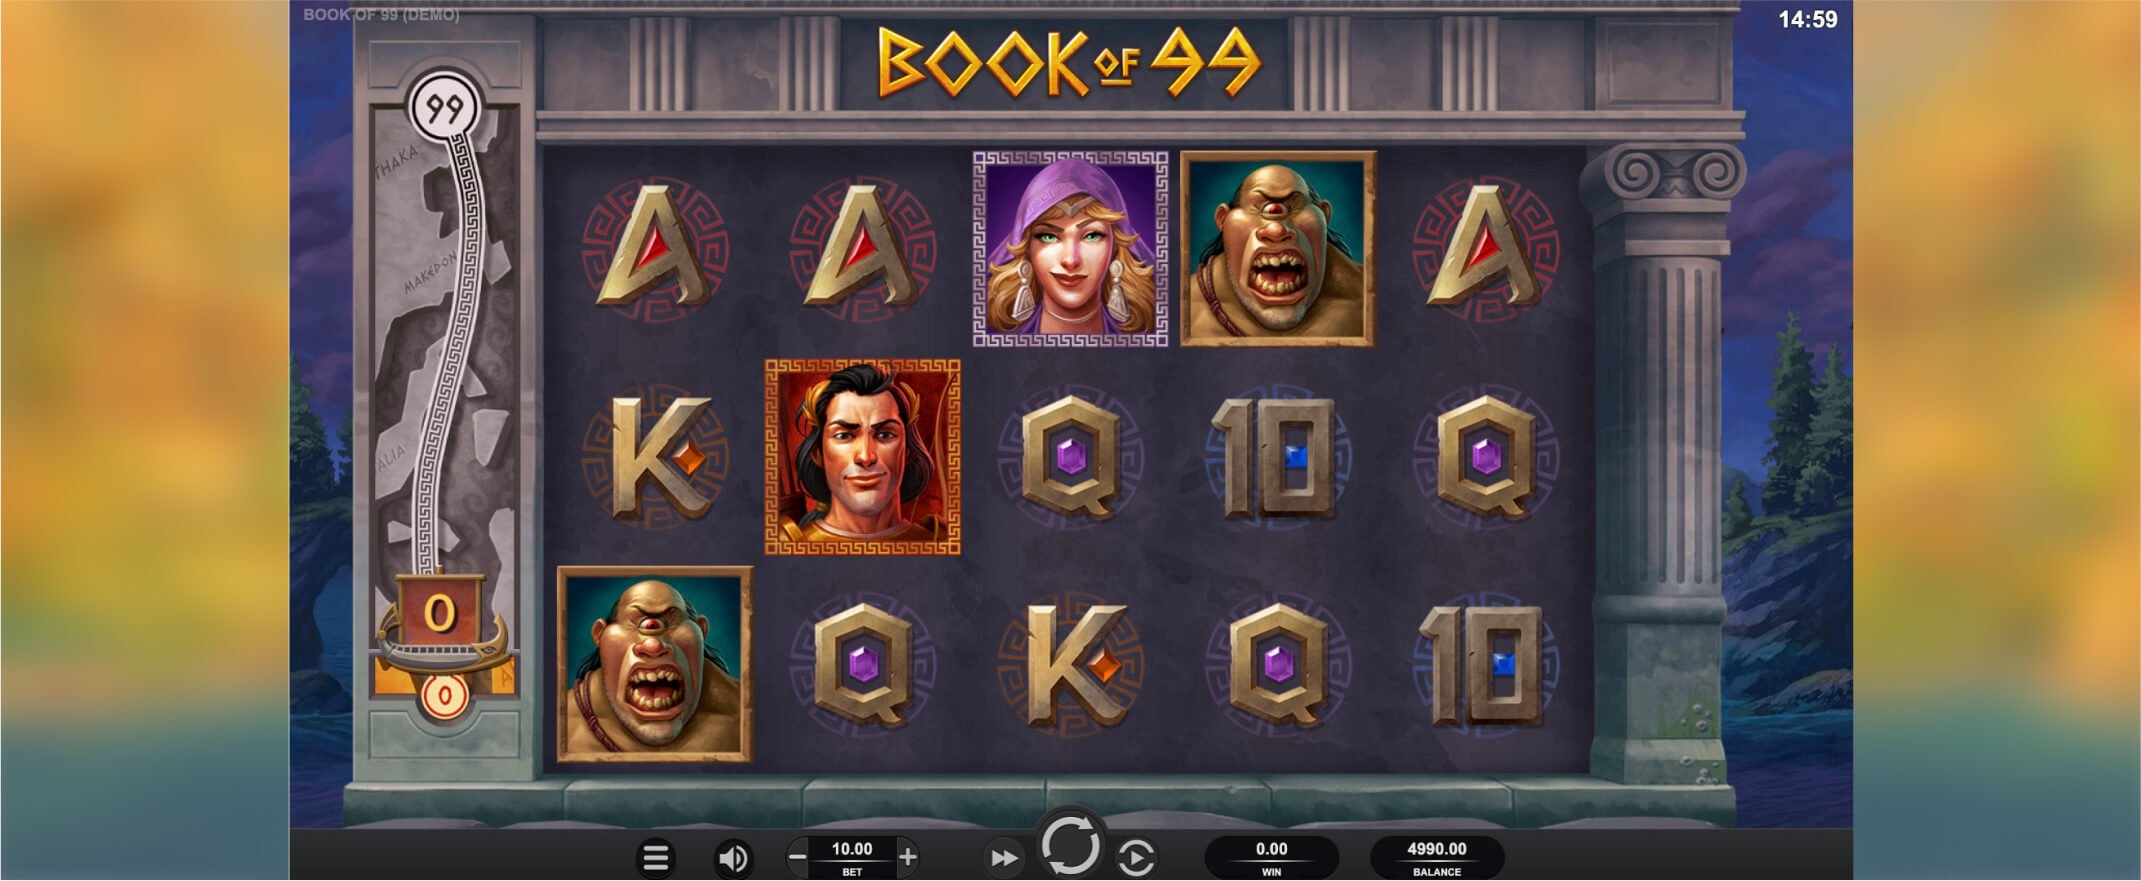 Book of 99 slot screenshot of the reels